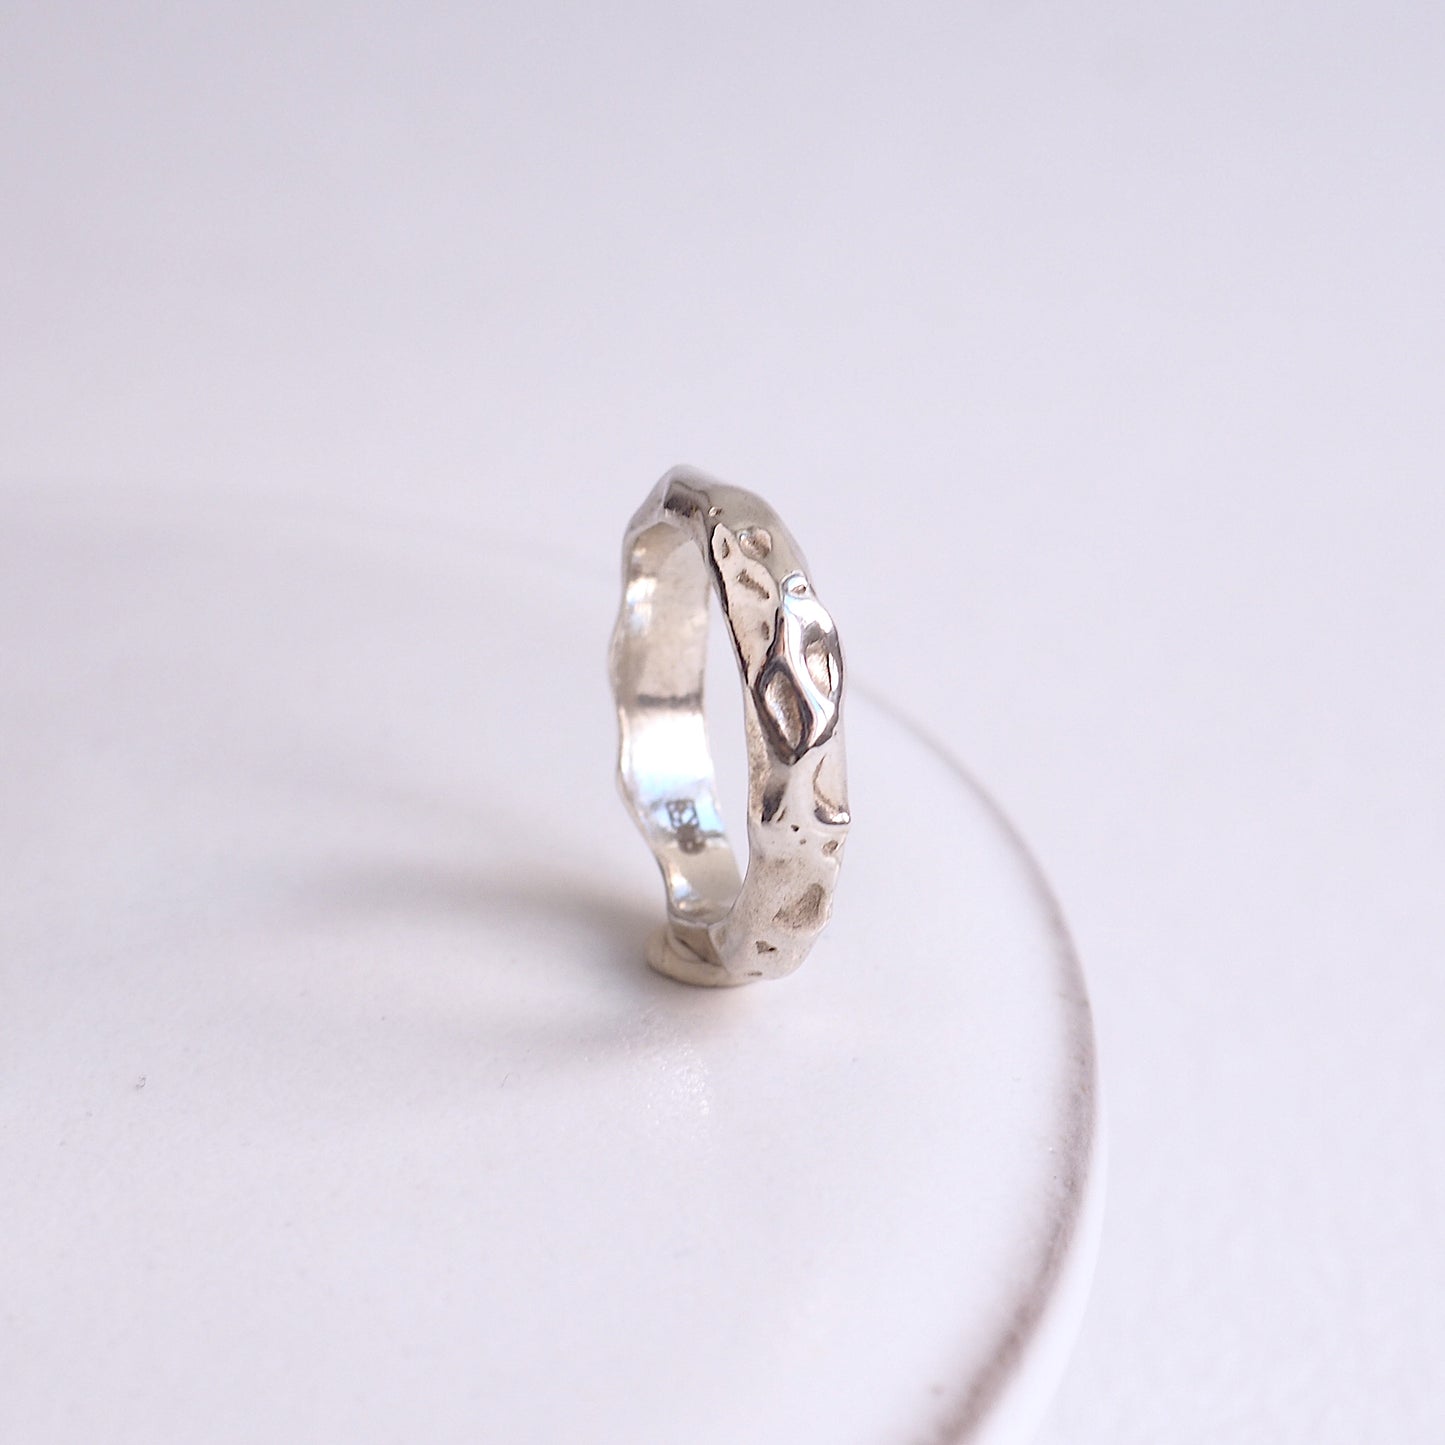 Marea Ring sea Ocean Organic jewelry ring silver gold handmade handcrafted fashion custom bespoke